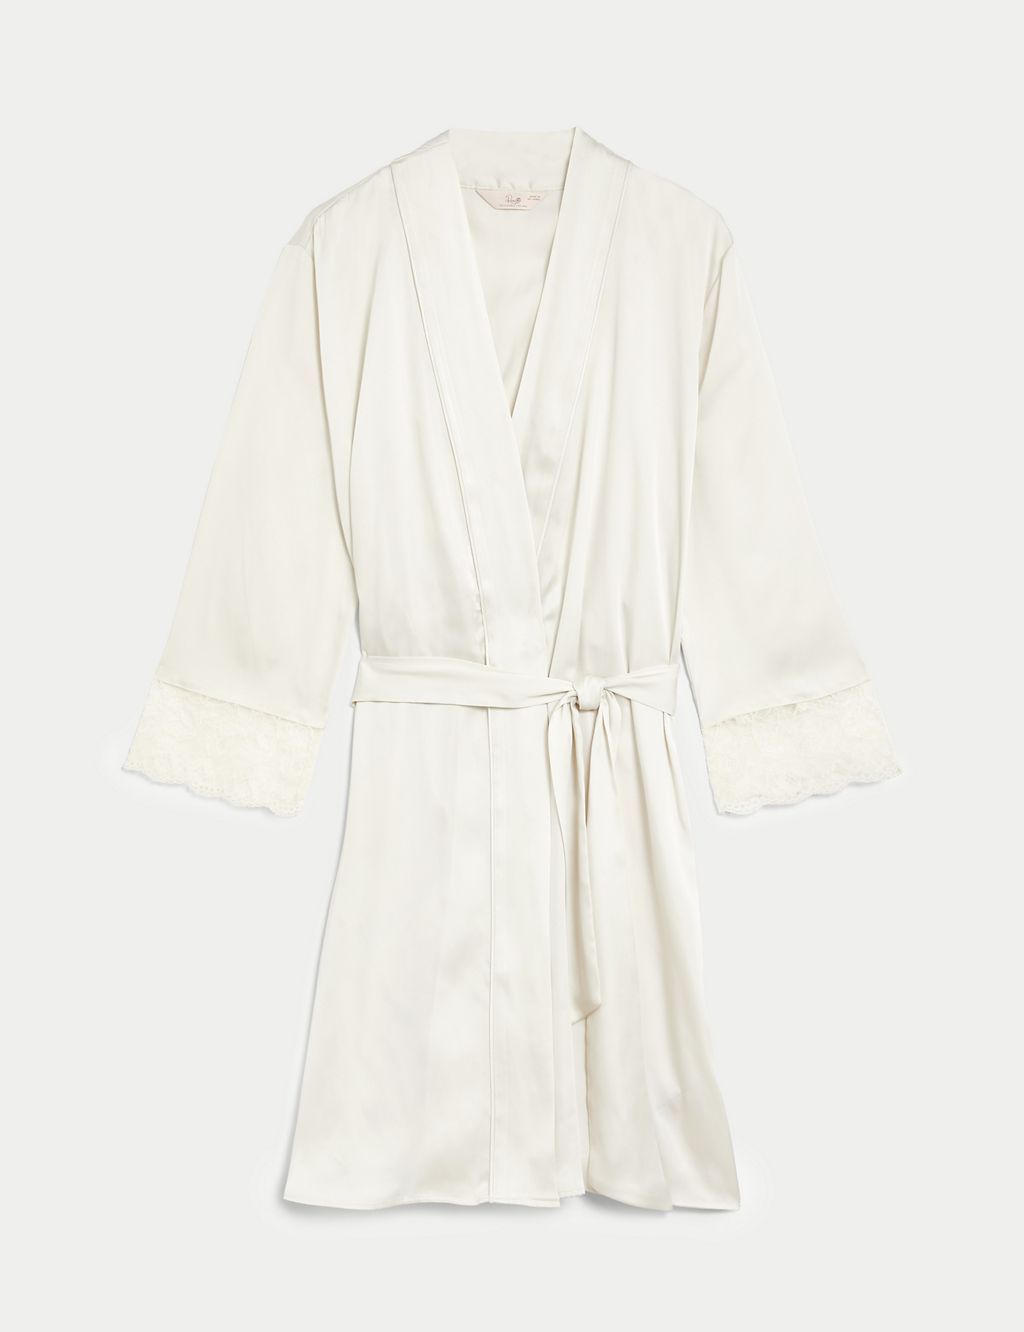 Ladies Dressing Gown Long Hooded Bathrobe Soft Fluffy Cosy Robe for Women  S-XL | eBay